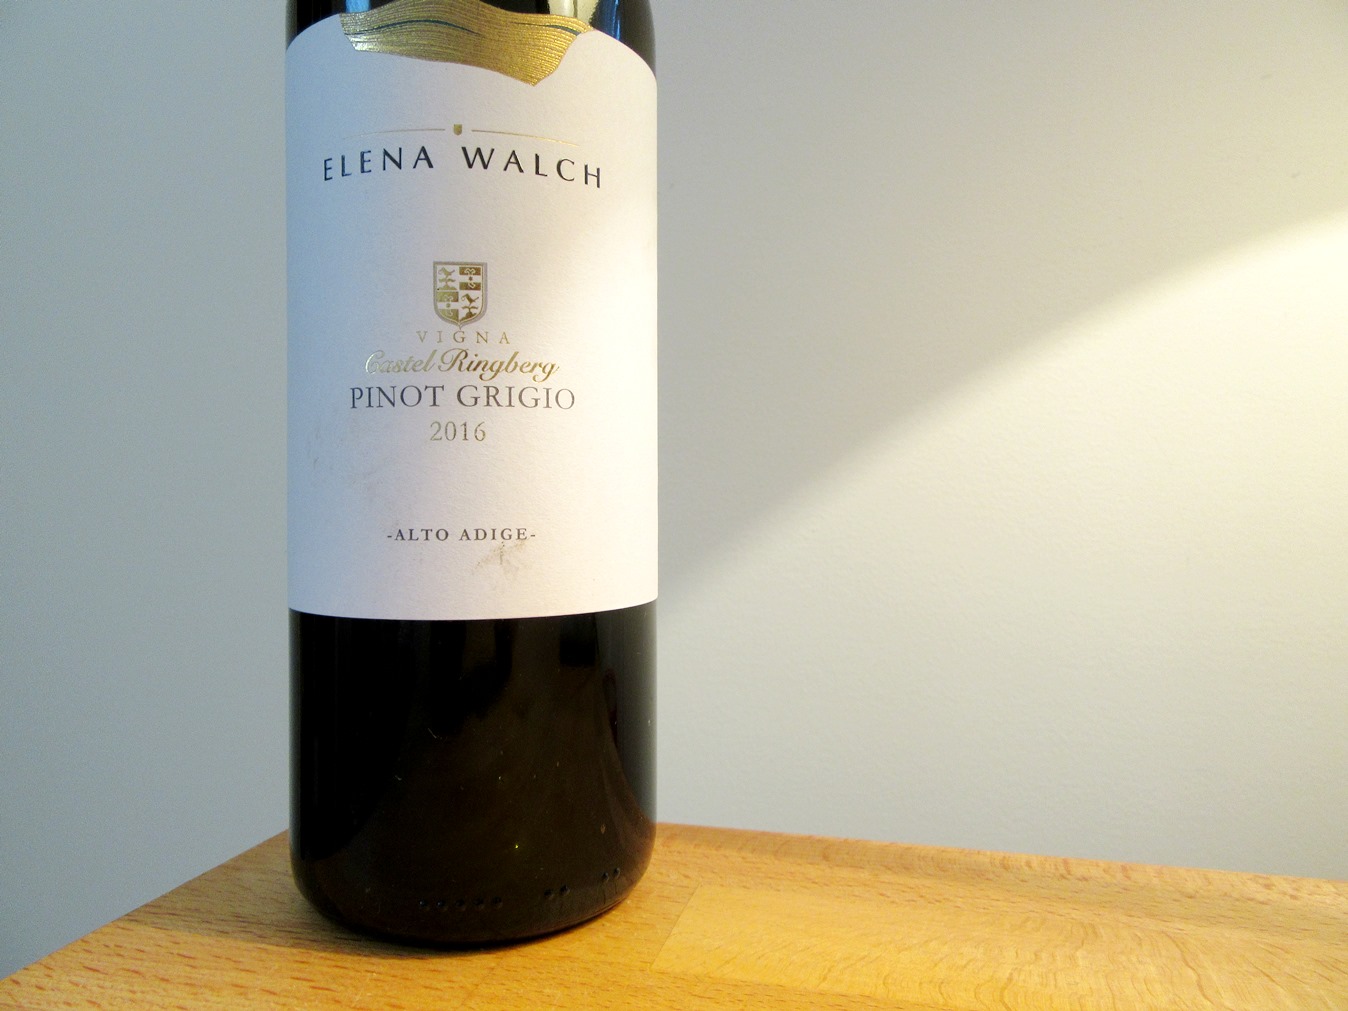 Elena Walch, Castel Ringberg Pinot Grigio 2016, Alto Adige, Italy, Wine Casual